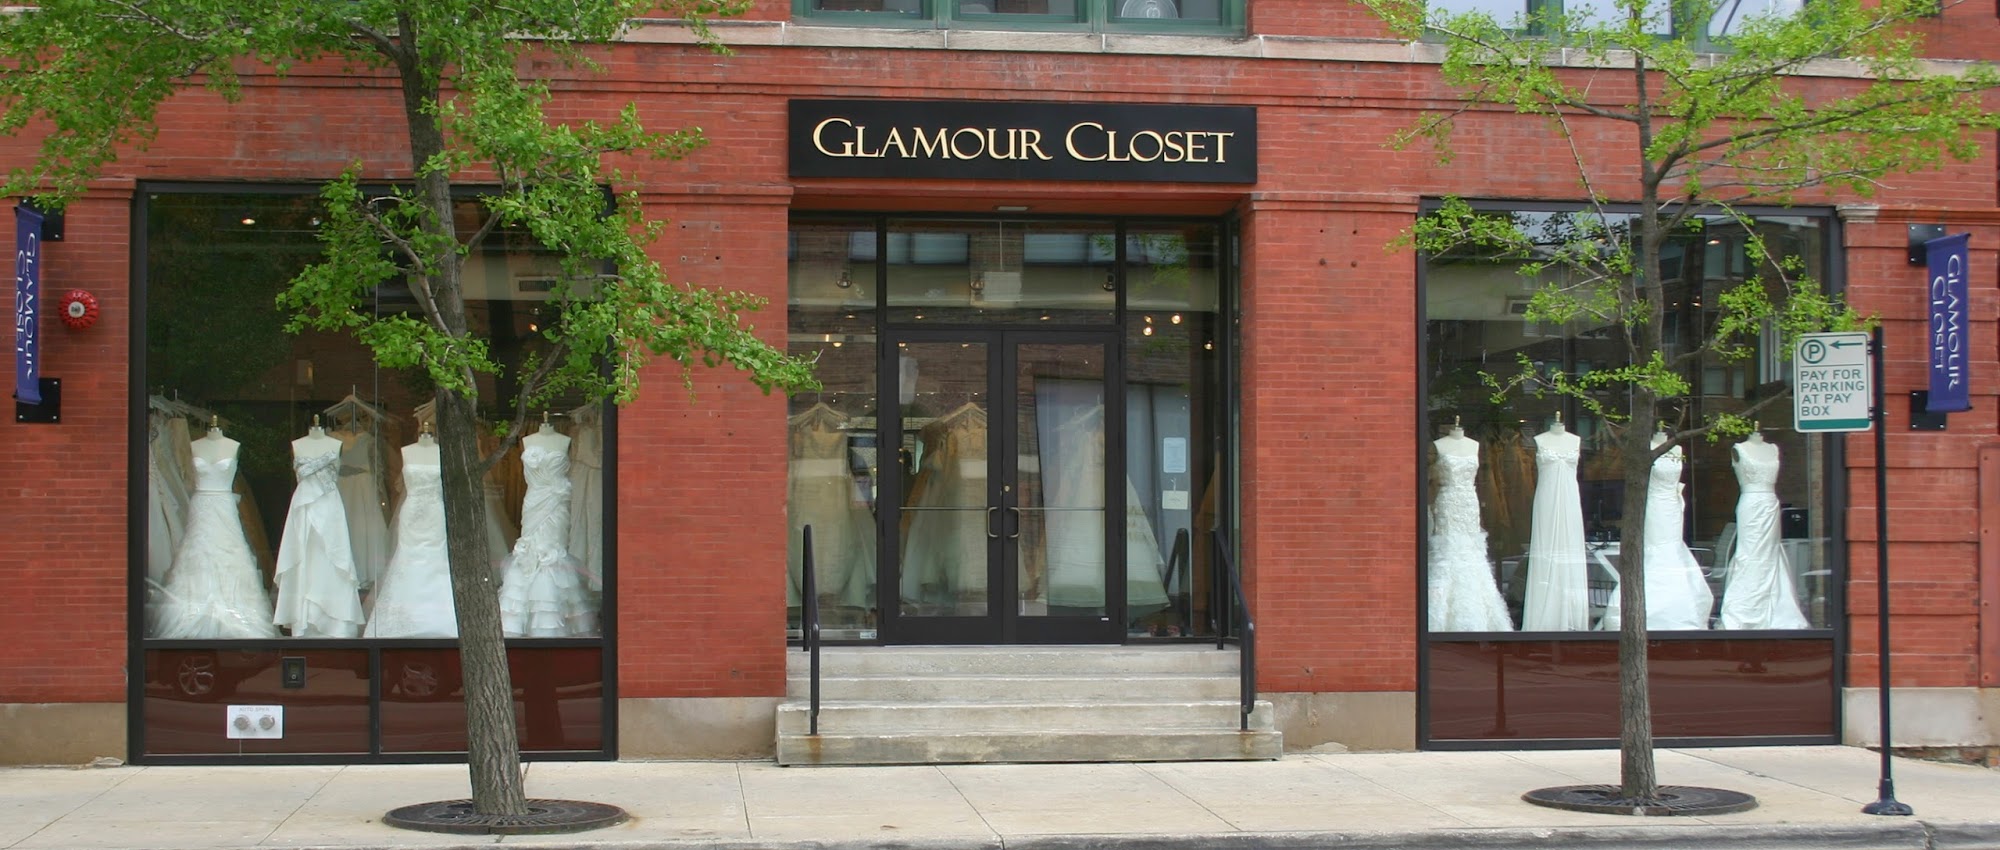 Glamour Closet Chicago